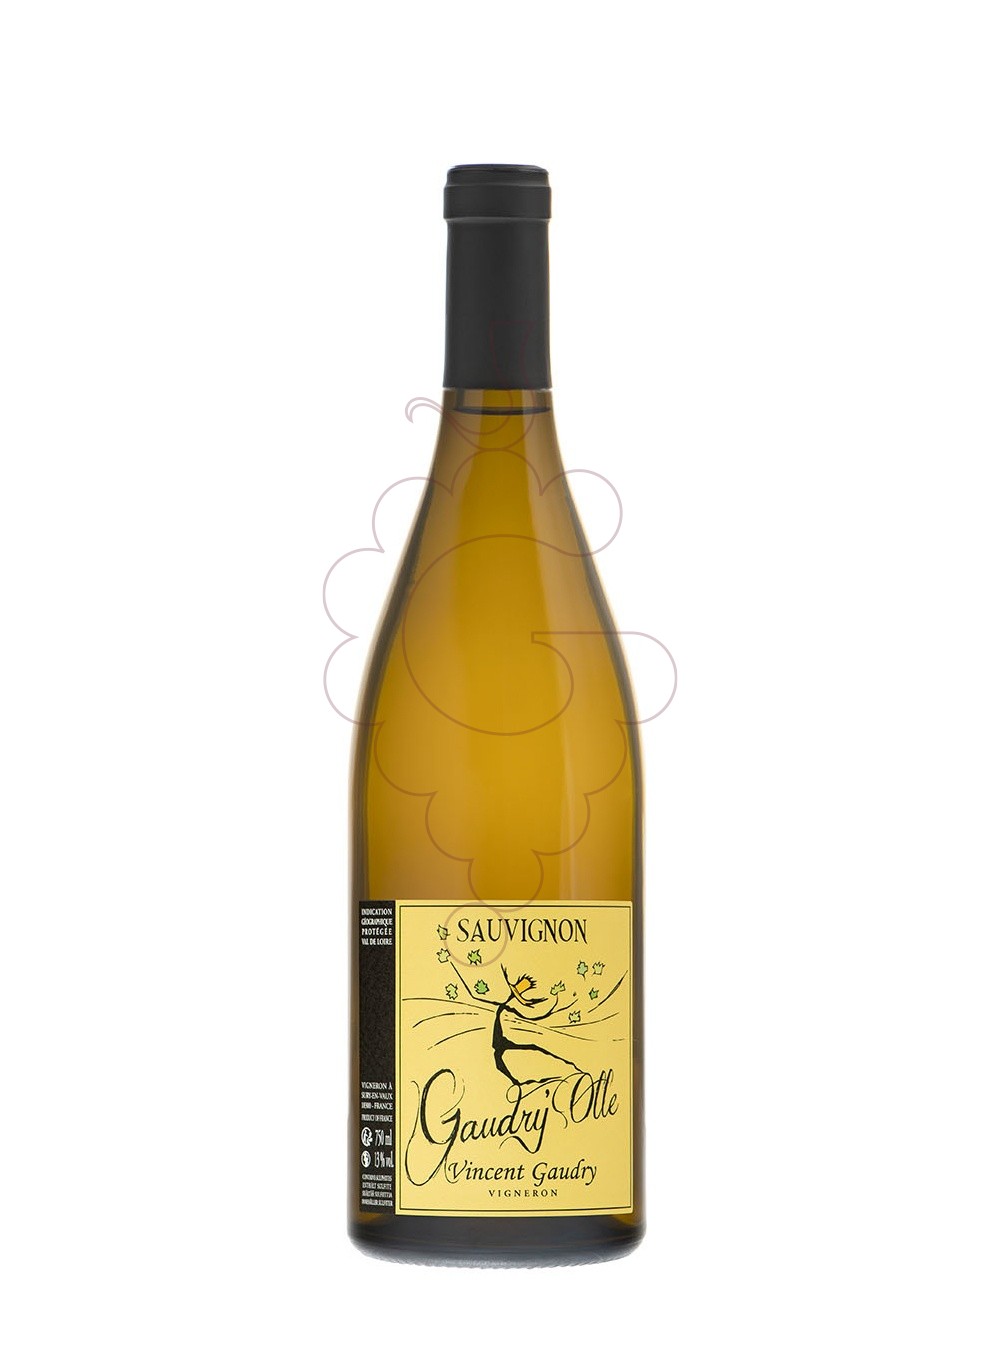 Foto Gaudry olle sauvignon blanc 22 vino blanco